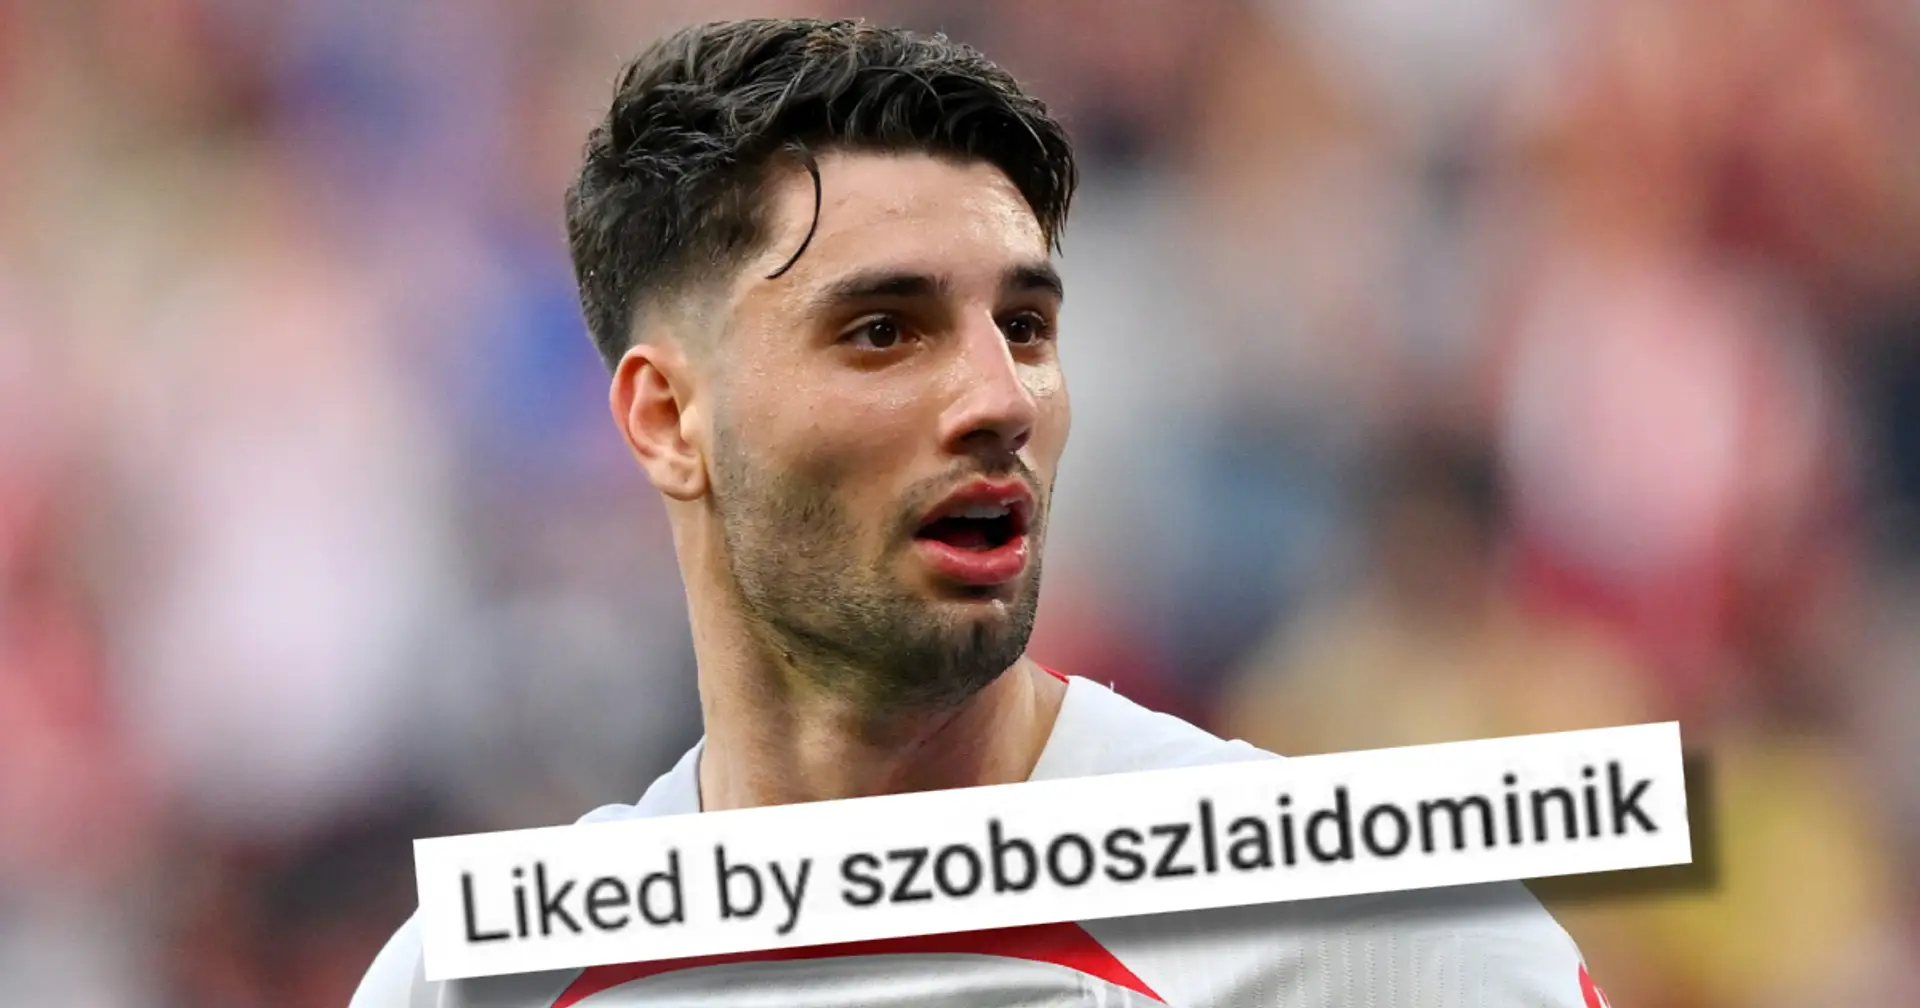 Dominik Szoboszlai's social media activity hints at his feelings over Liverpool move